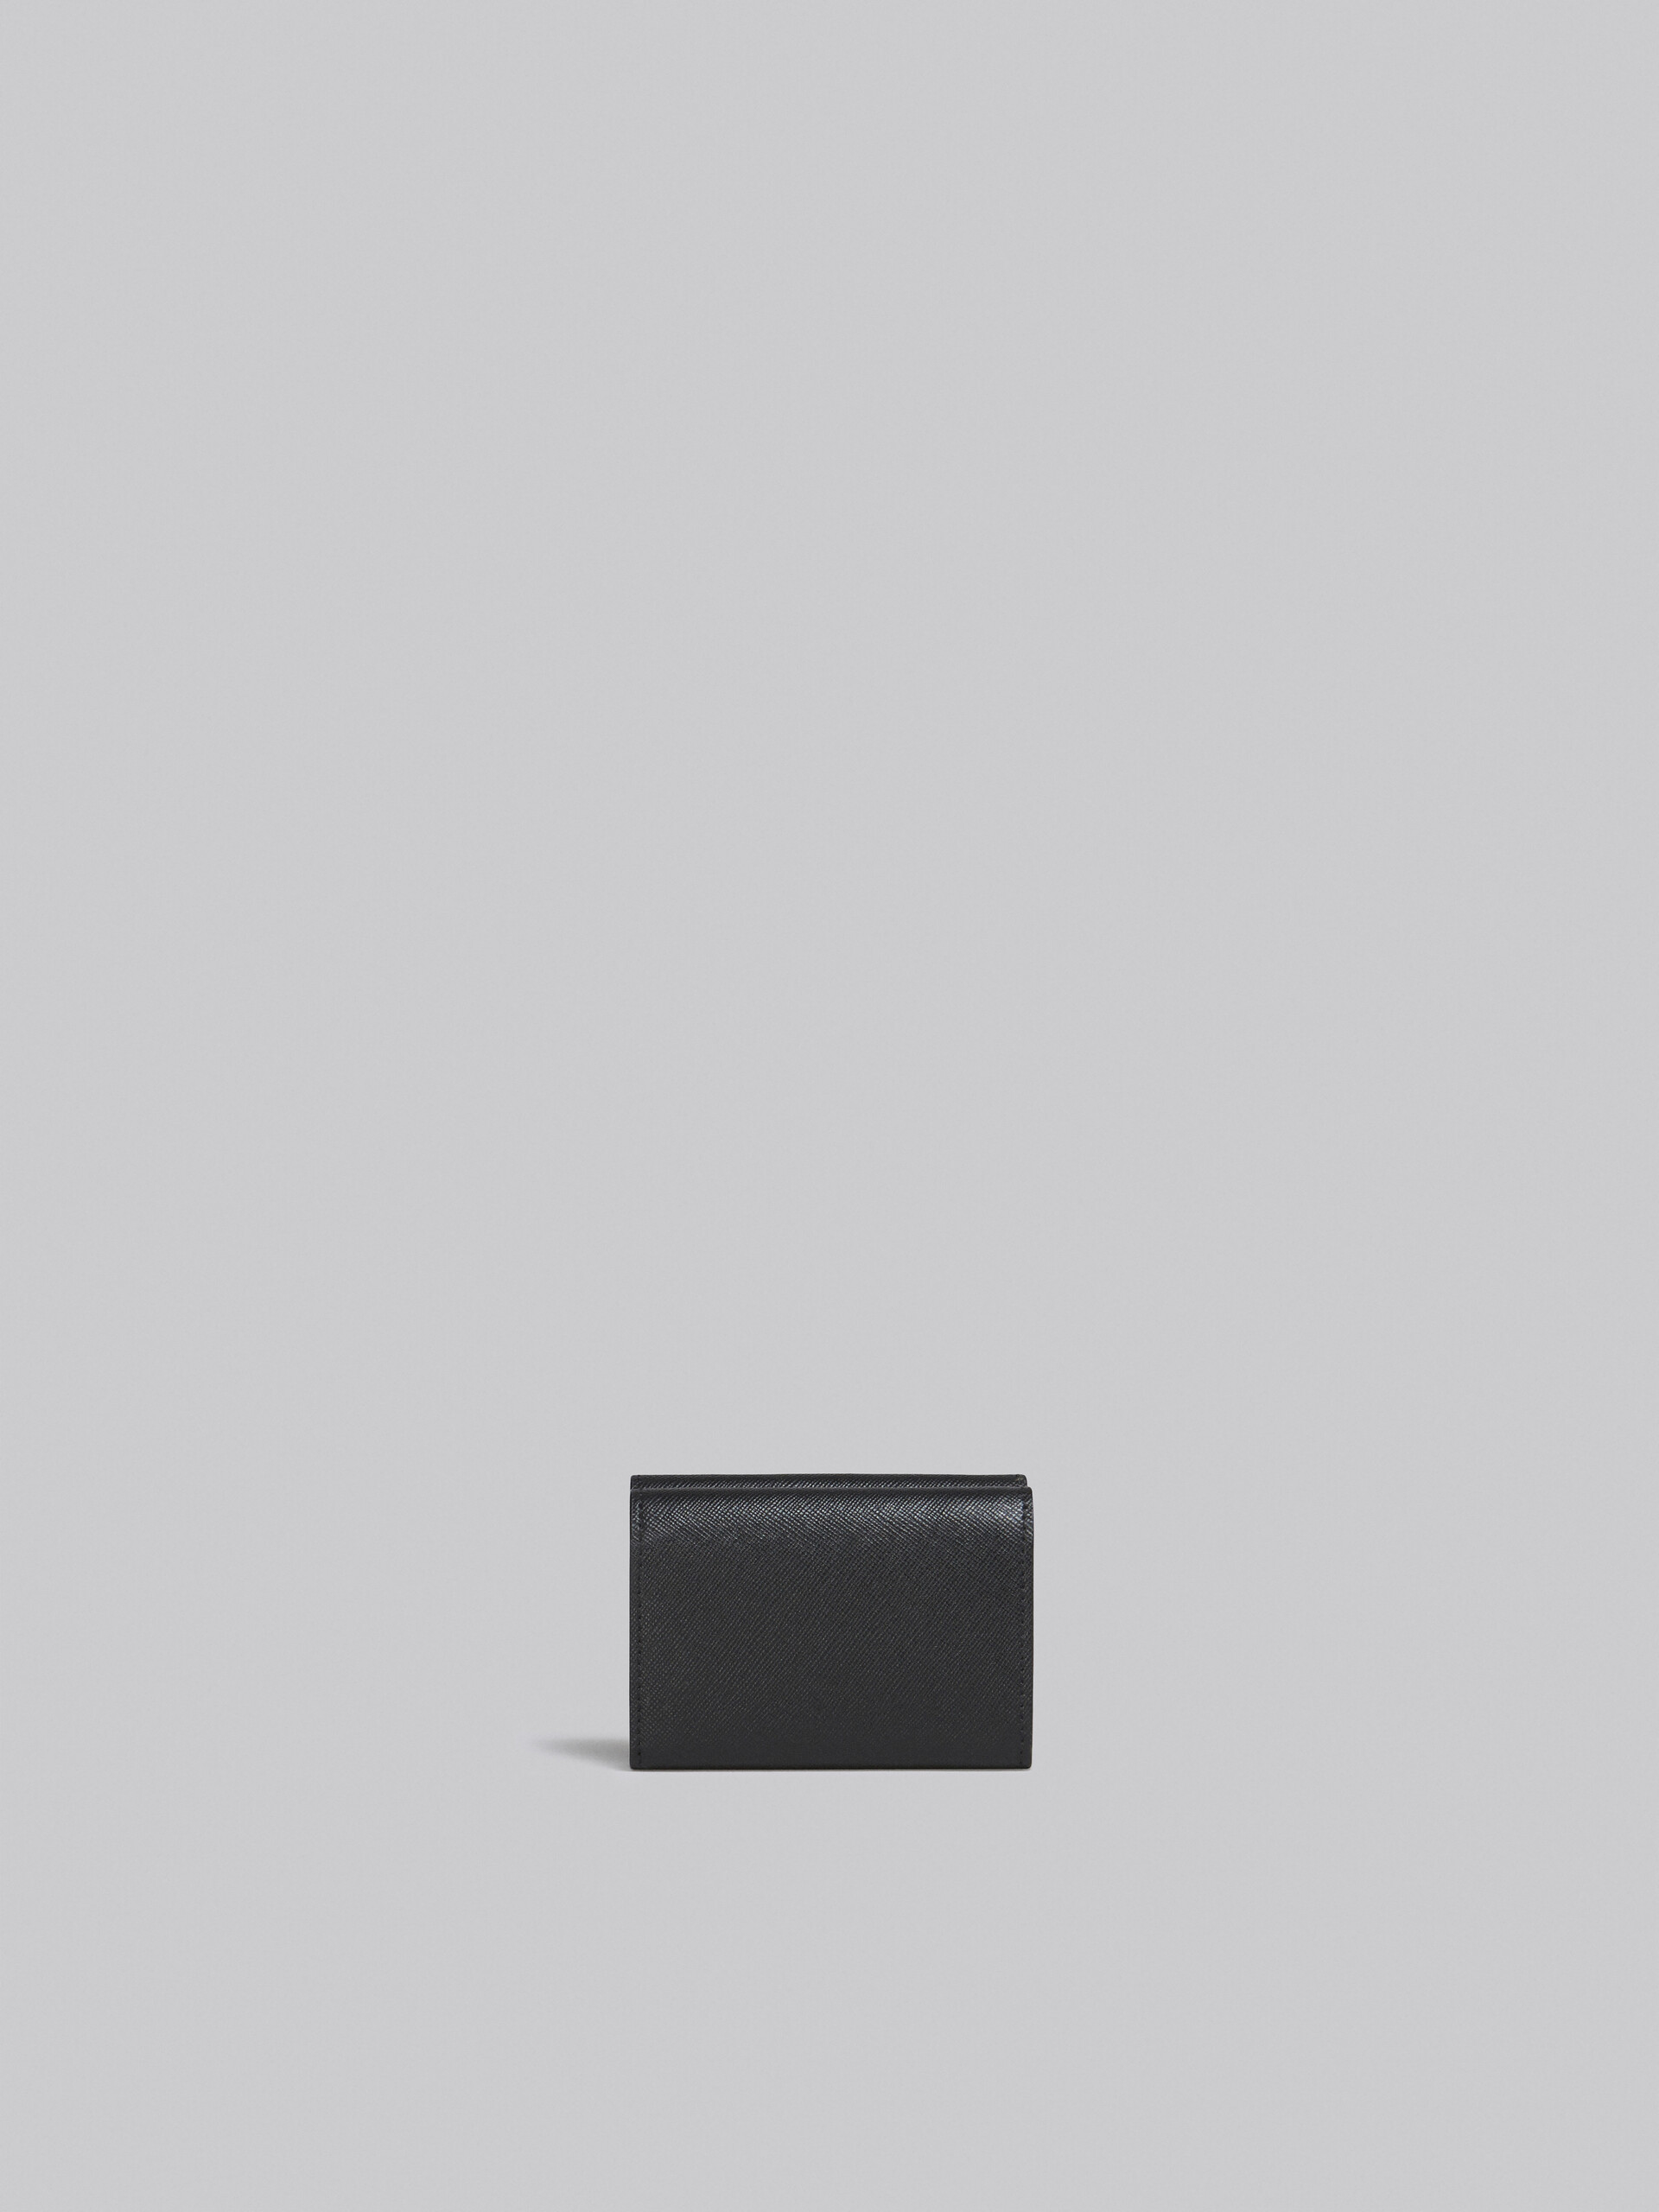 Black saffiano leather tri-fold wallet - Wallets - Image 3